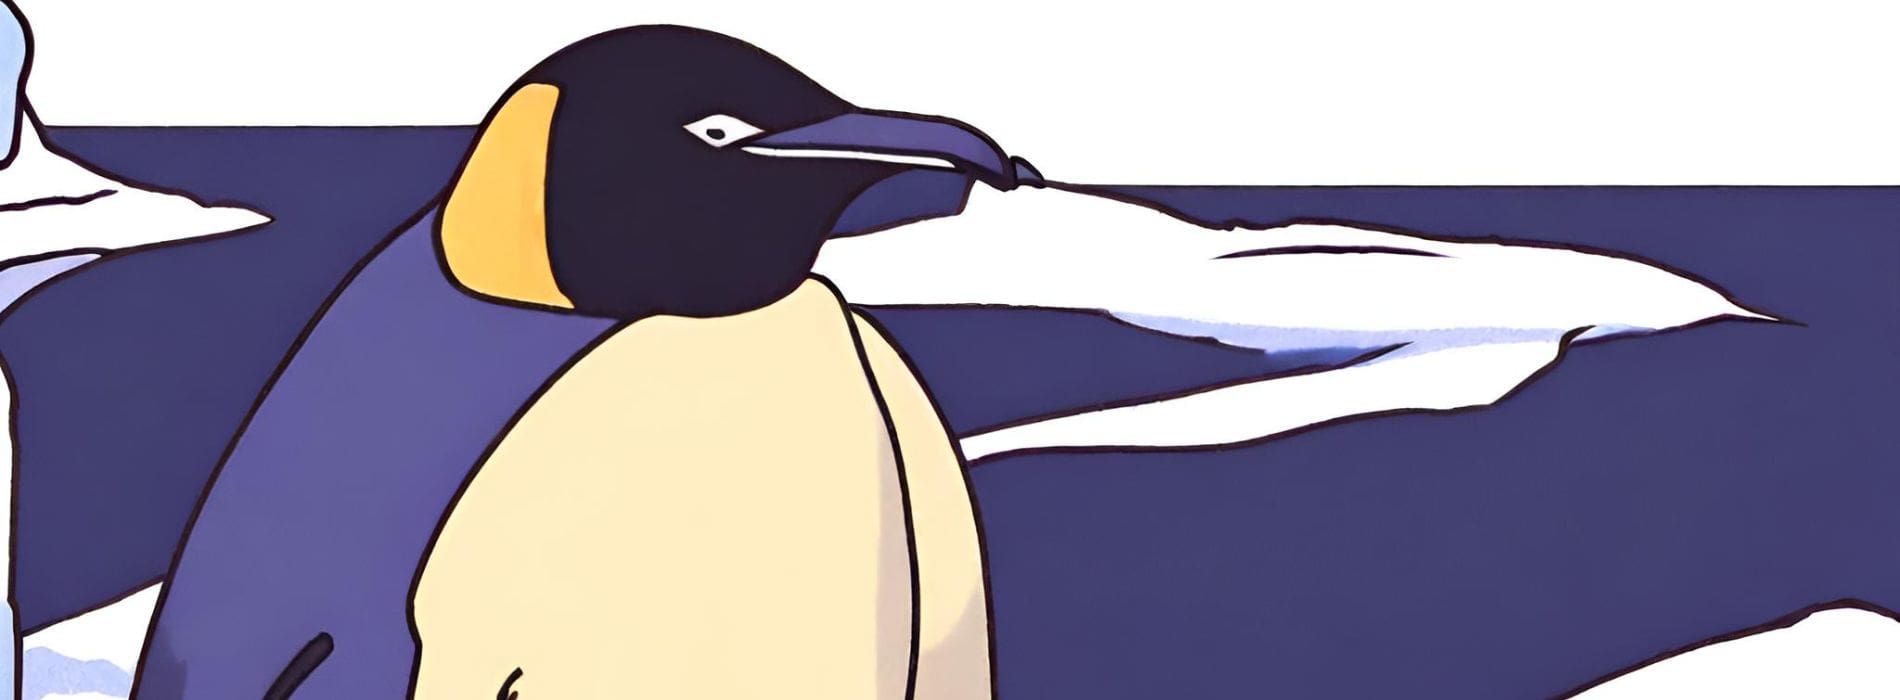 How to draw emperor penguin?